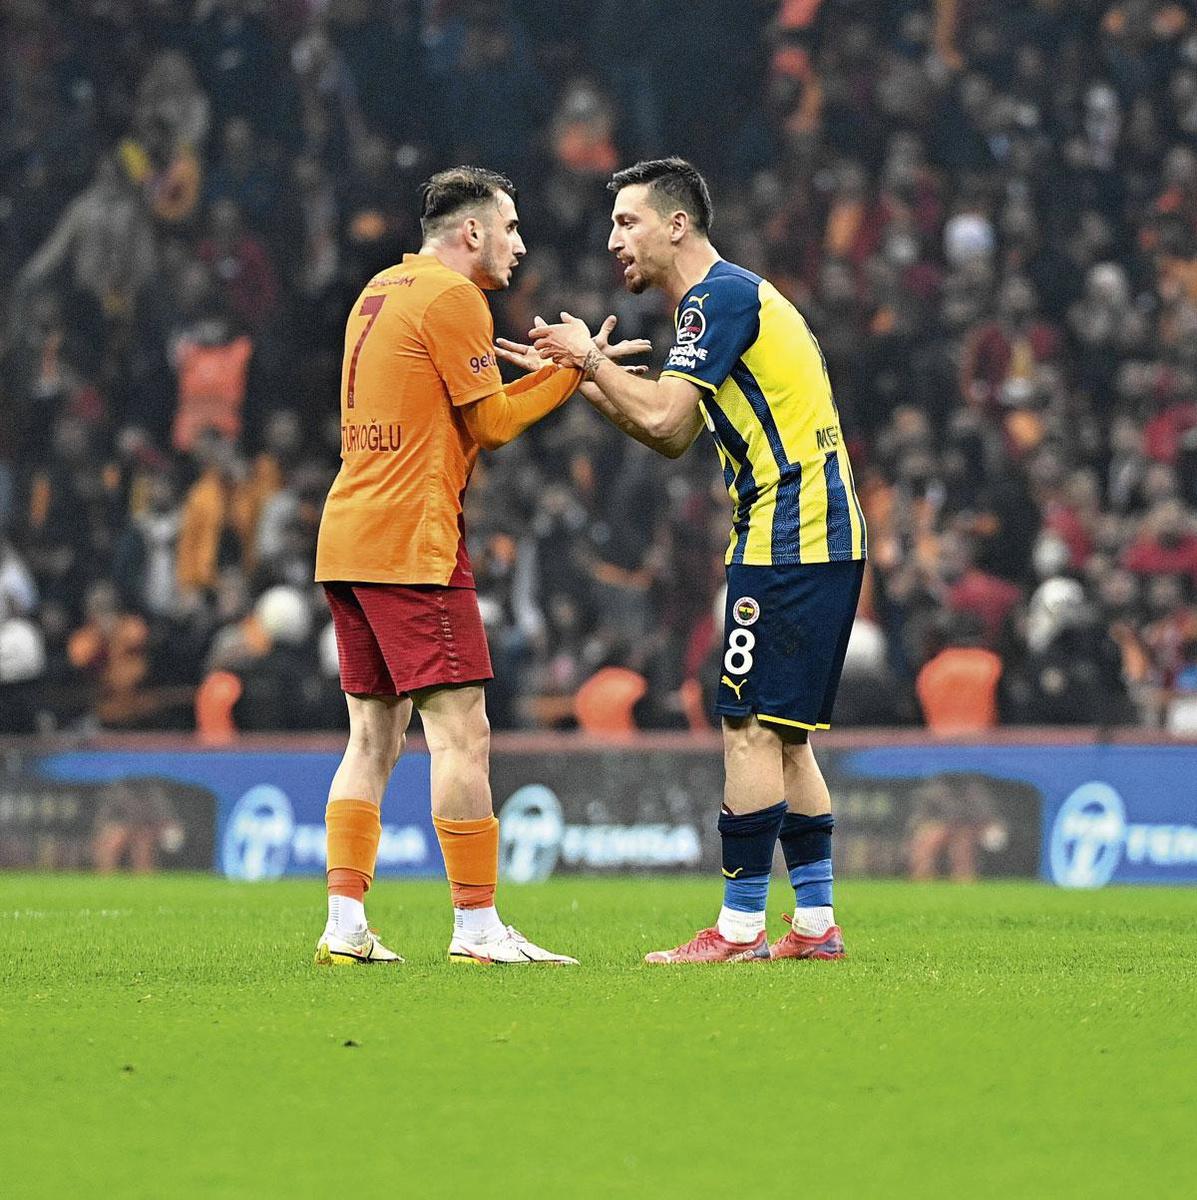 Kerem Aktürkoglu en Mert Hakan Yandas in een verhit onderonsje tijdens Galatasaray-Fenerbahçe.Extra information